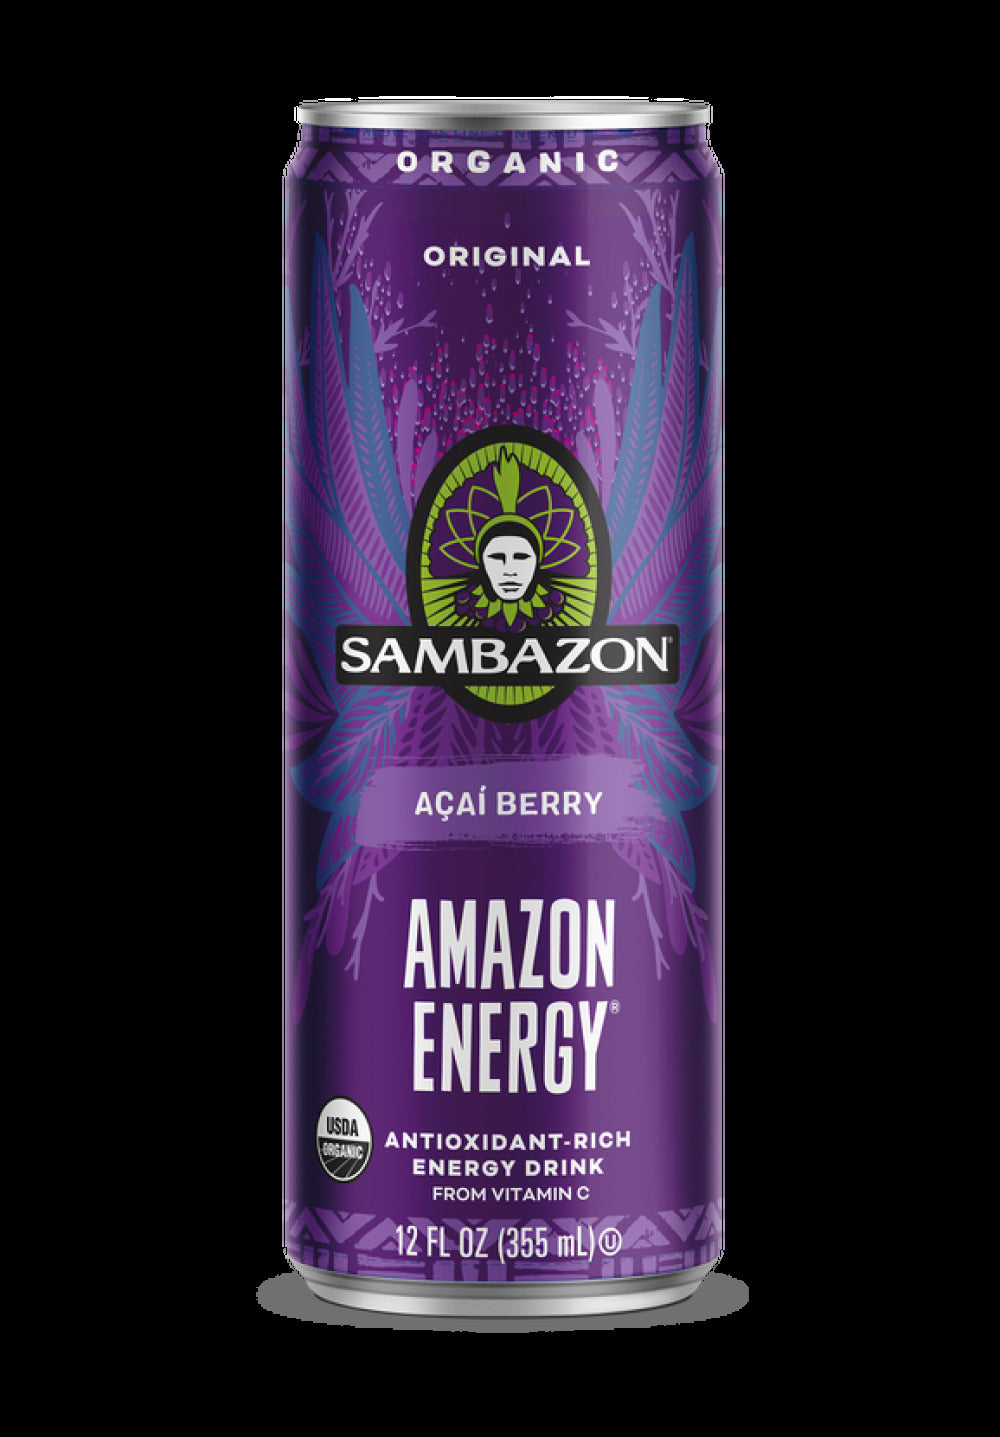 Sambazon Original Amazon Acai Berry Organic Energy Drink-12 fl oz.s-12/Case